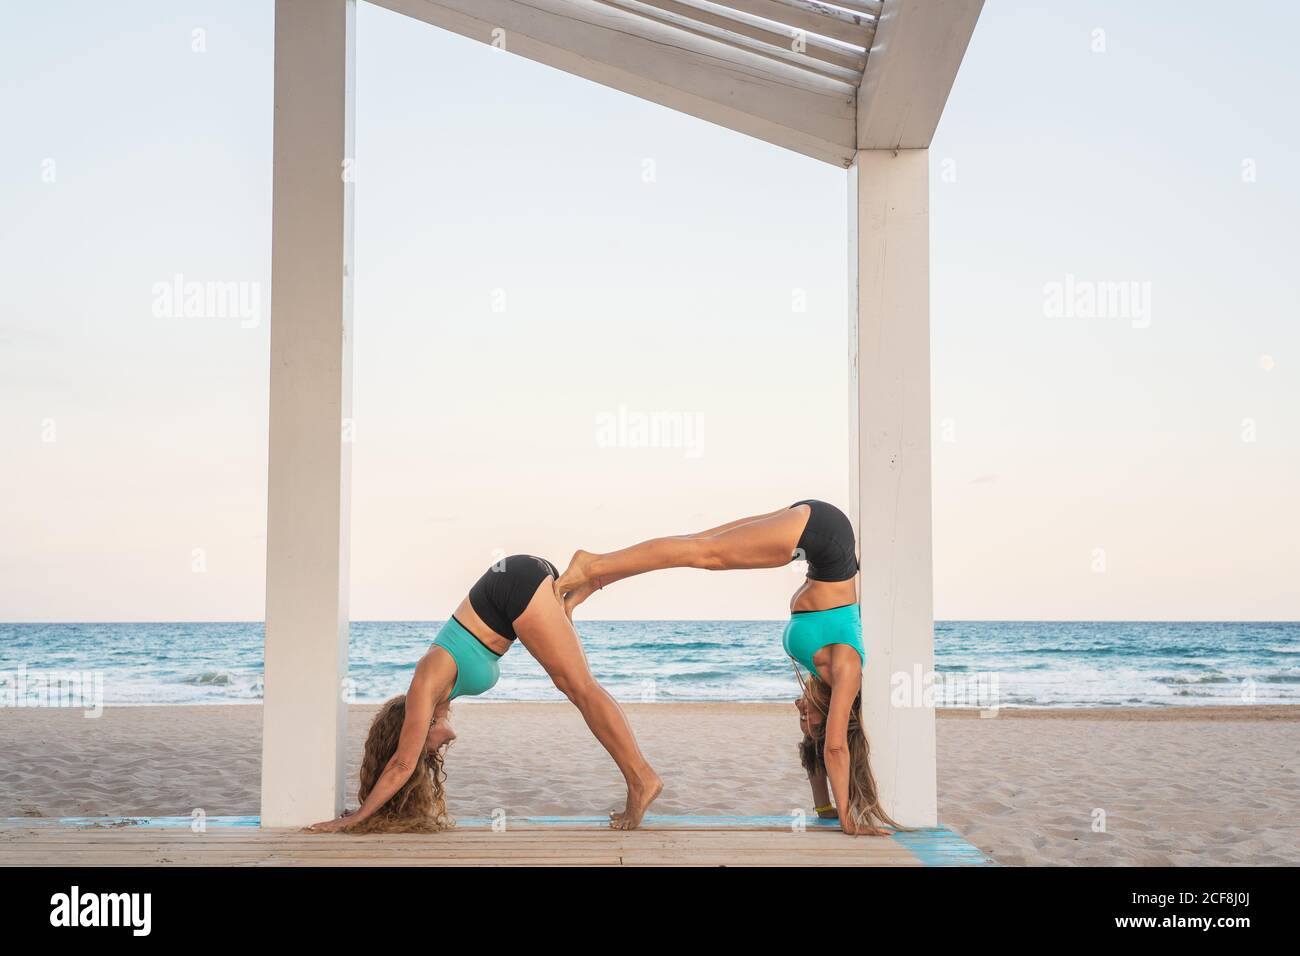 Sportive women making acroyoga posture double dog down on sandy beach Stock Photo